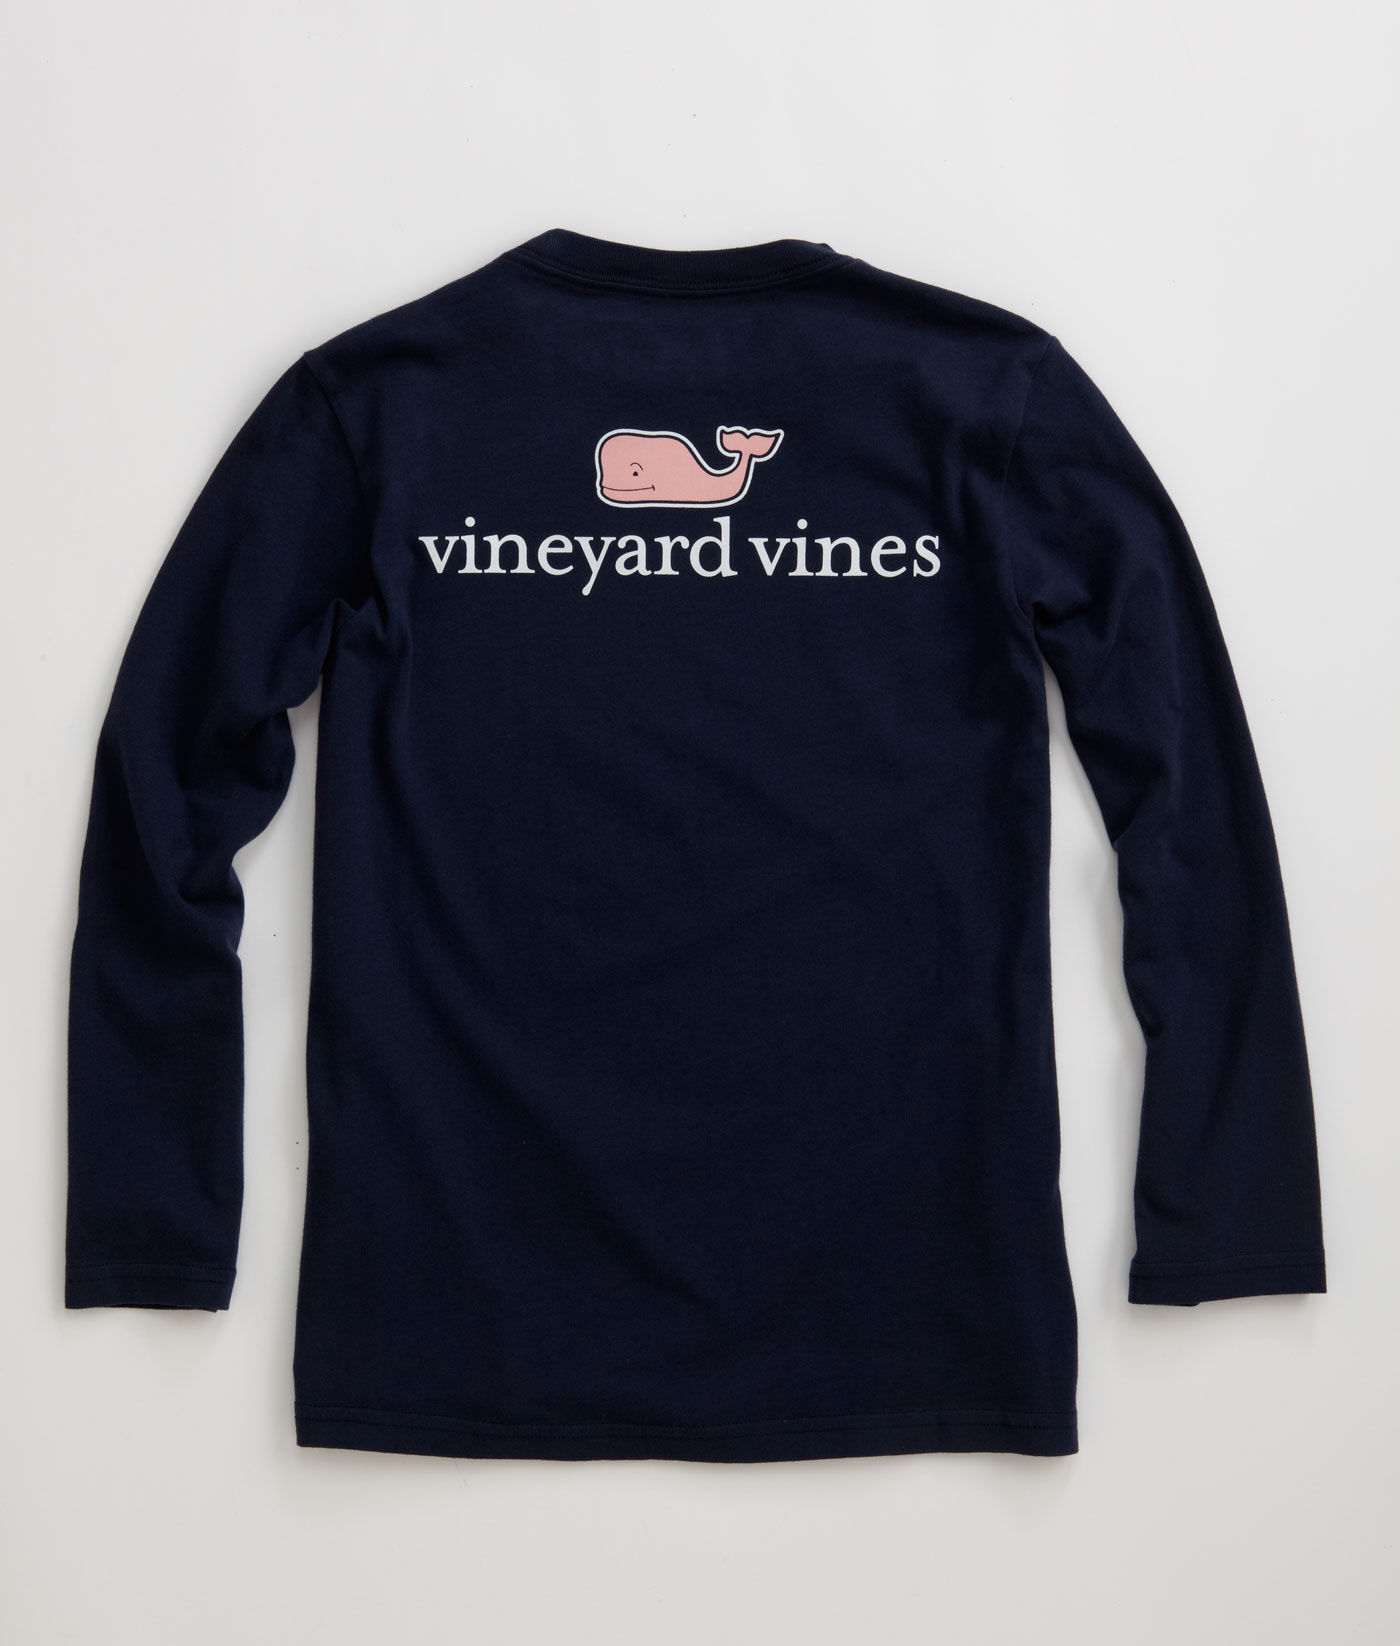 Vineyard Vines Shirt Size Chart